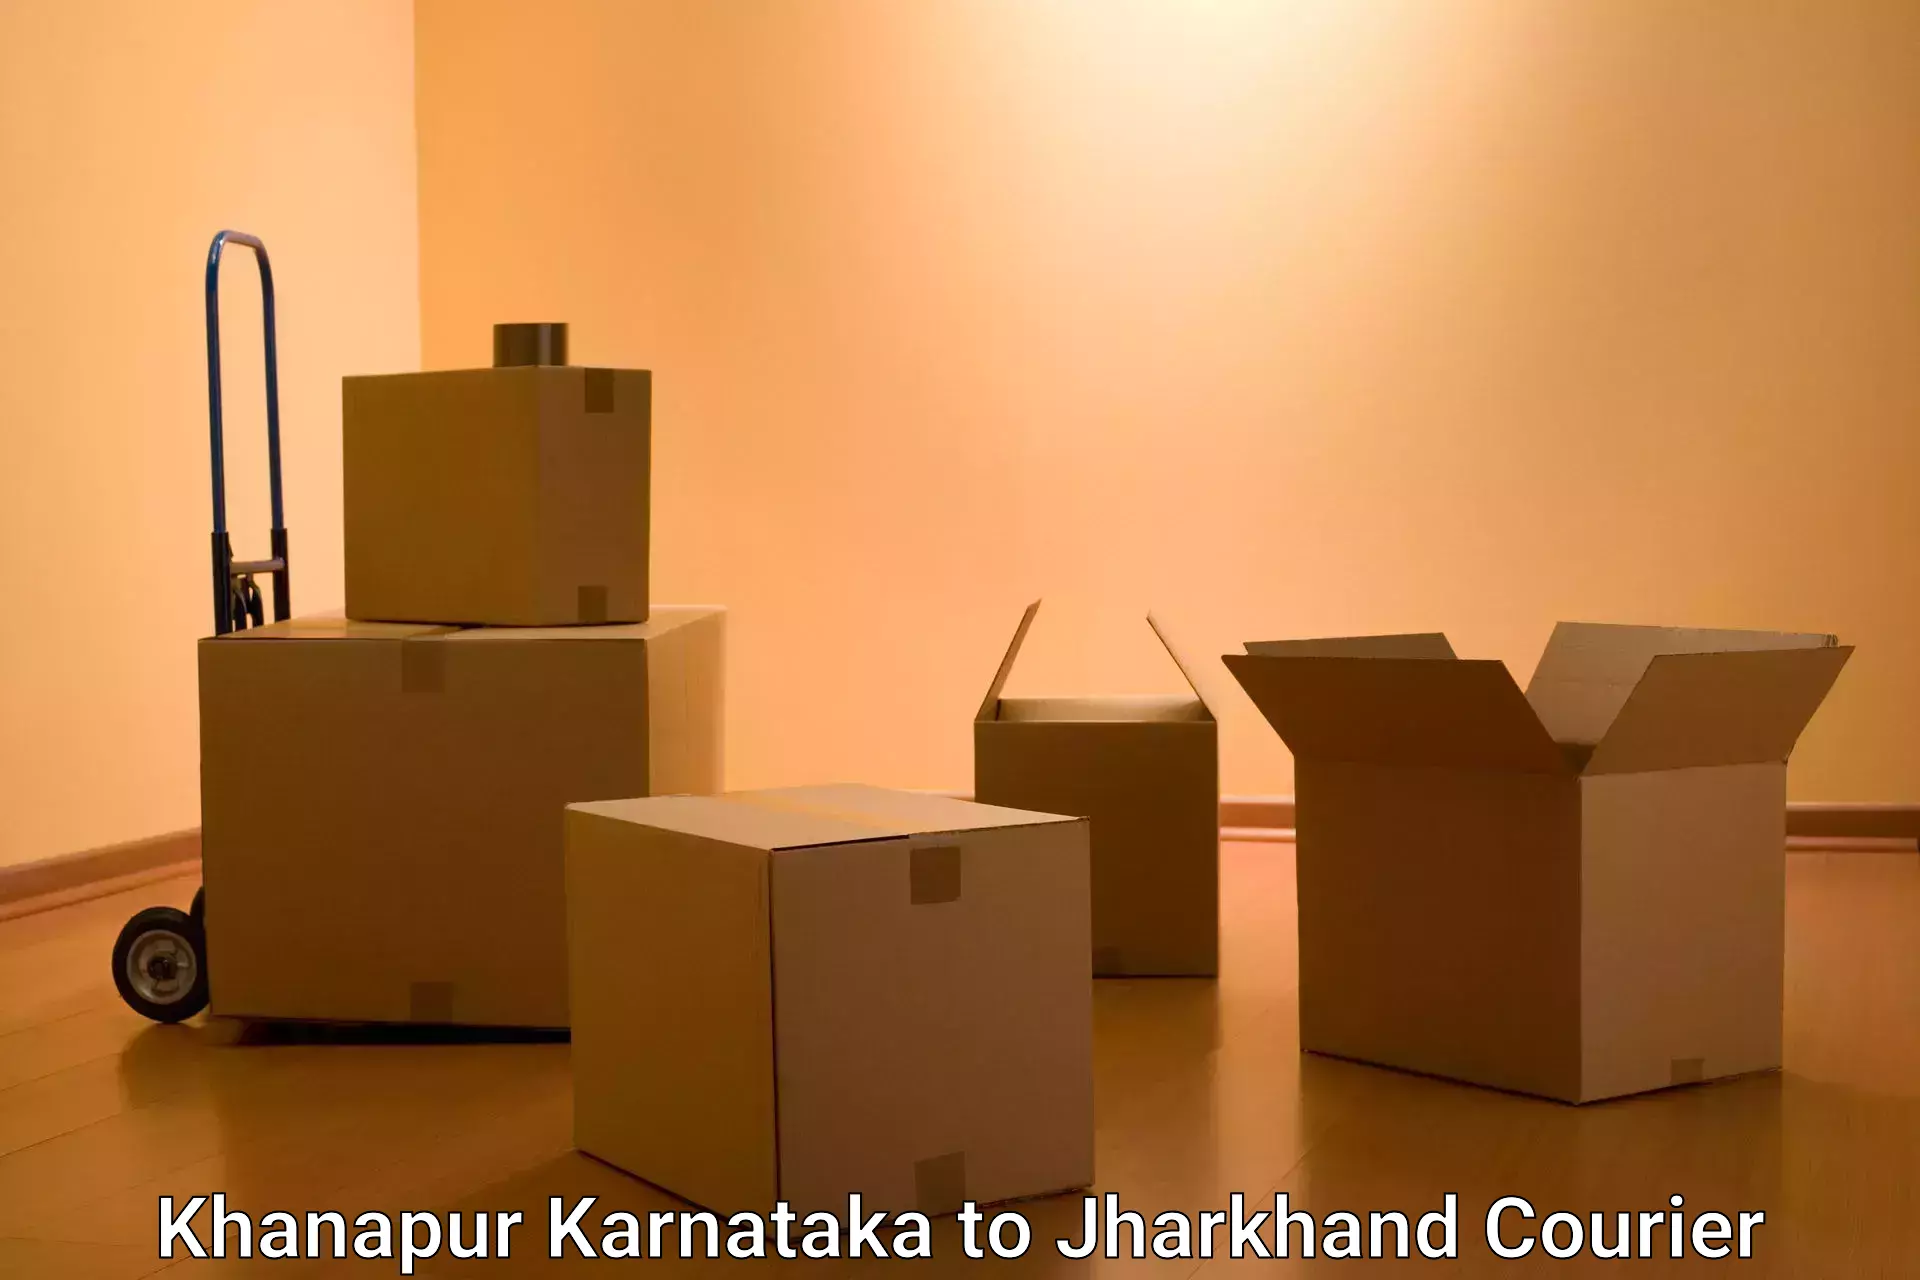 Express package handling in Khanapur Karnataka to Dhanbad